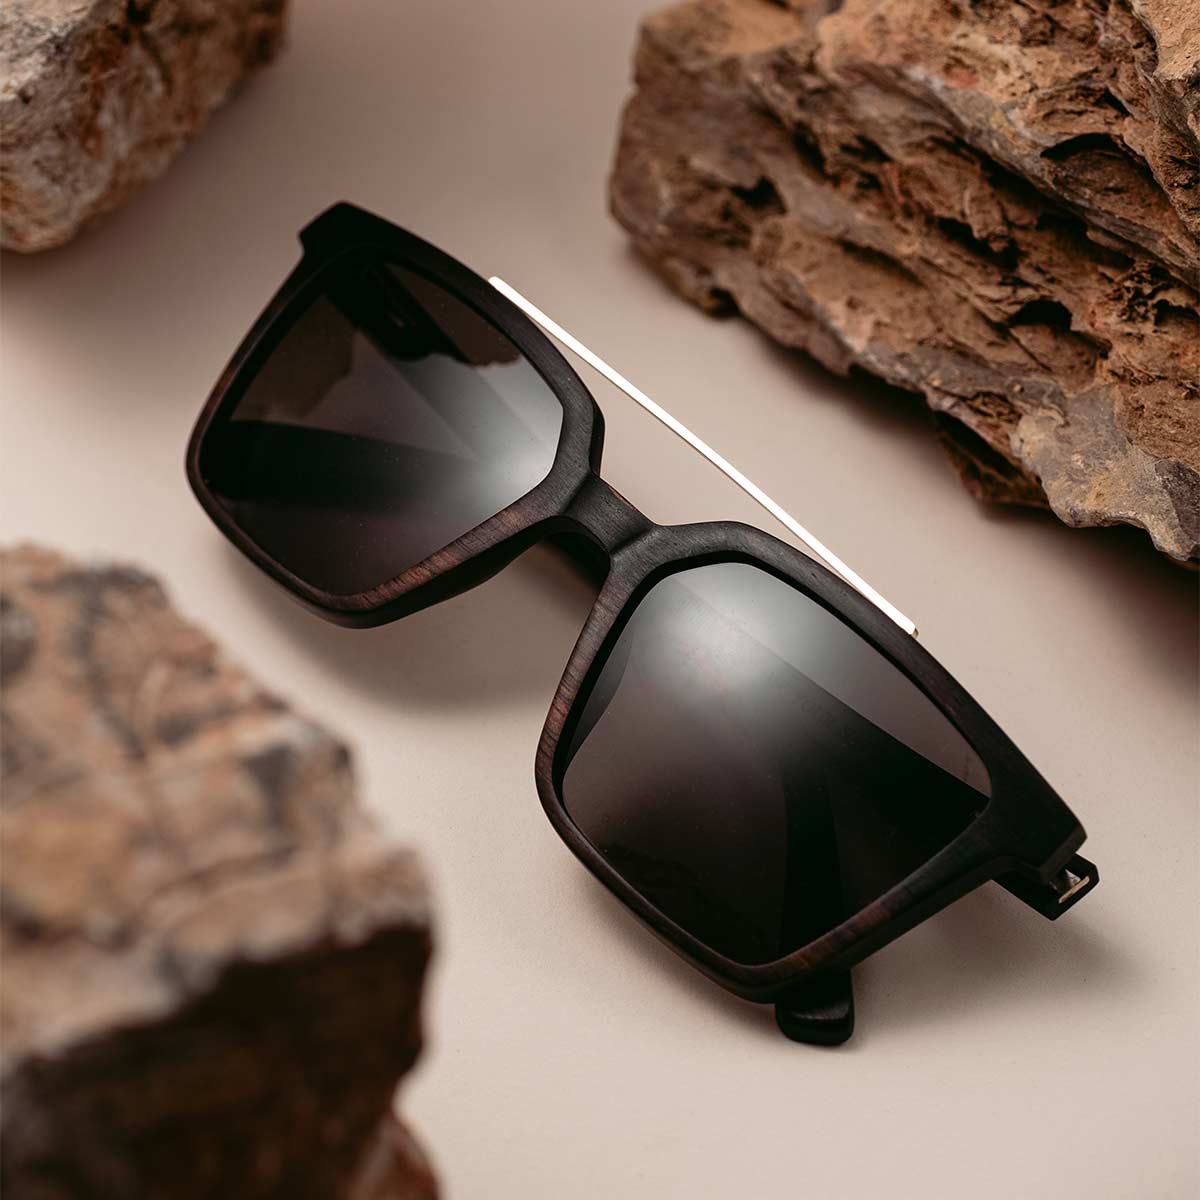 Wooden Sunglasses - AARNI - Made of Wood with Carbon Core - Puiset aurinkolasit hiilikuituytimellä